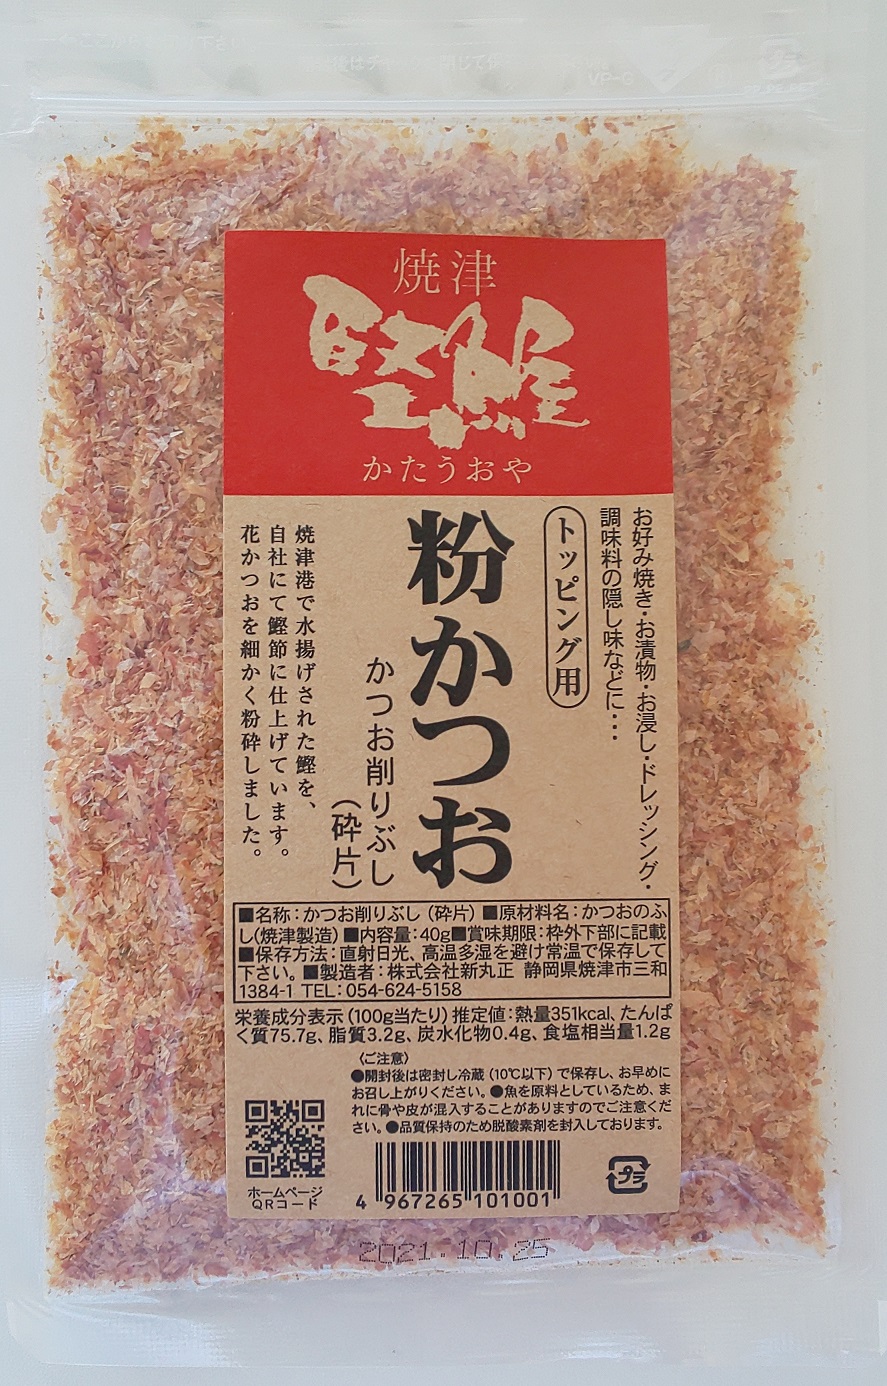 Kona Katsuo 40g (Powdered Dried Bonito)